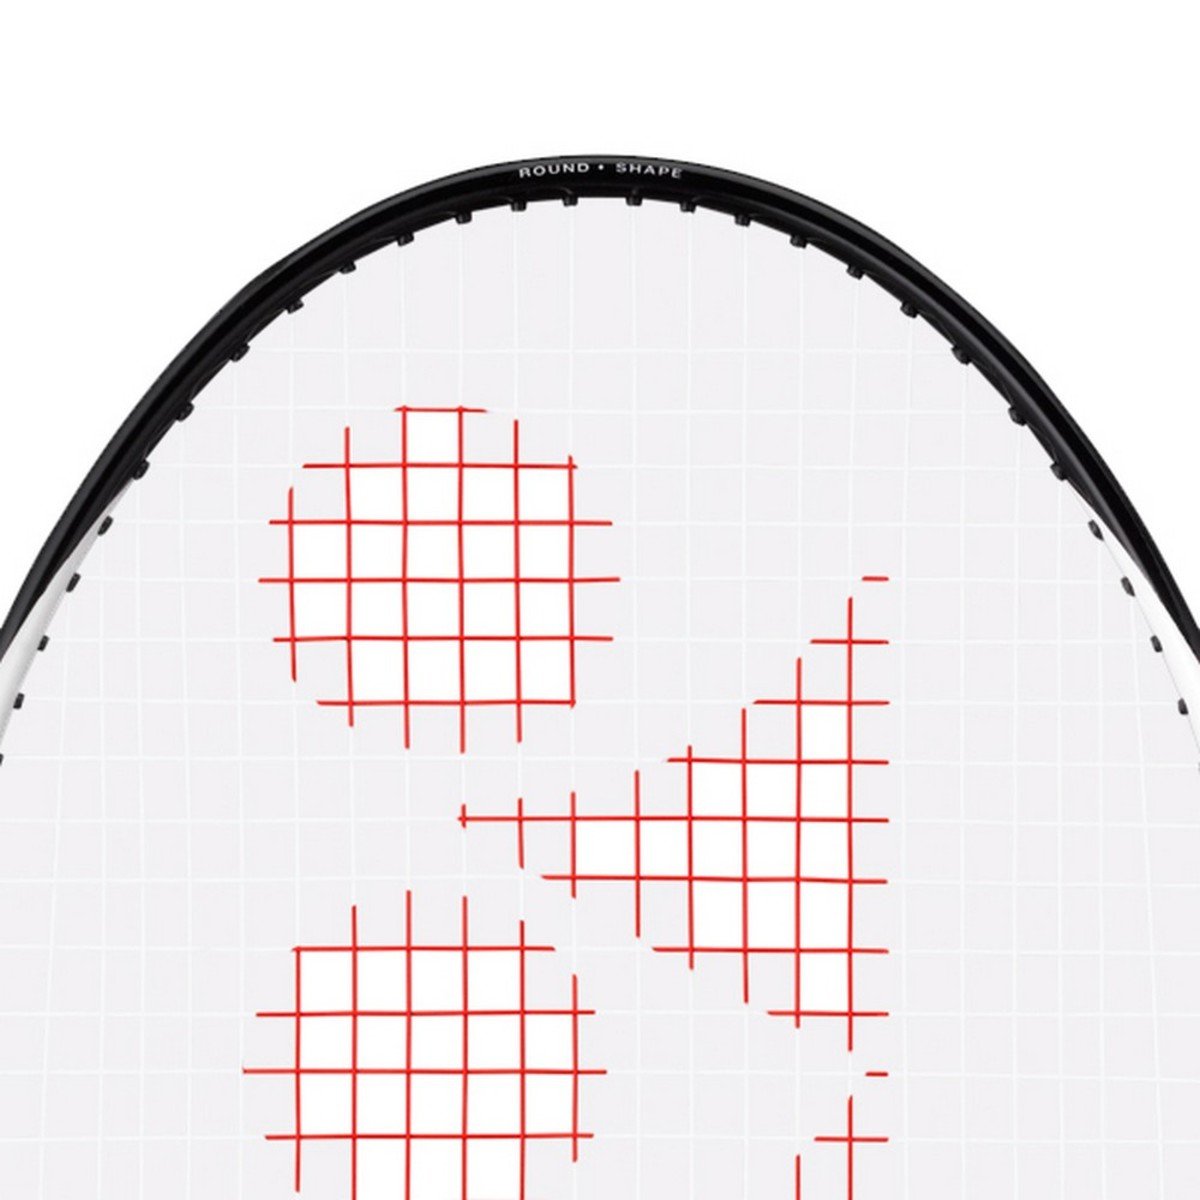 Yonex Carbonex 8000N Badminton Racket Made in Taiwan